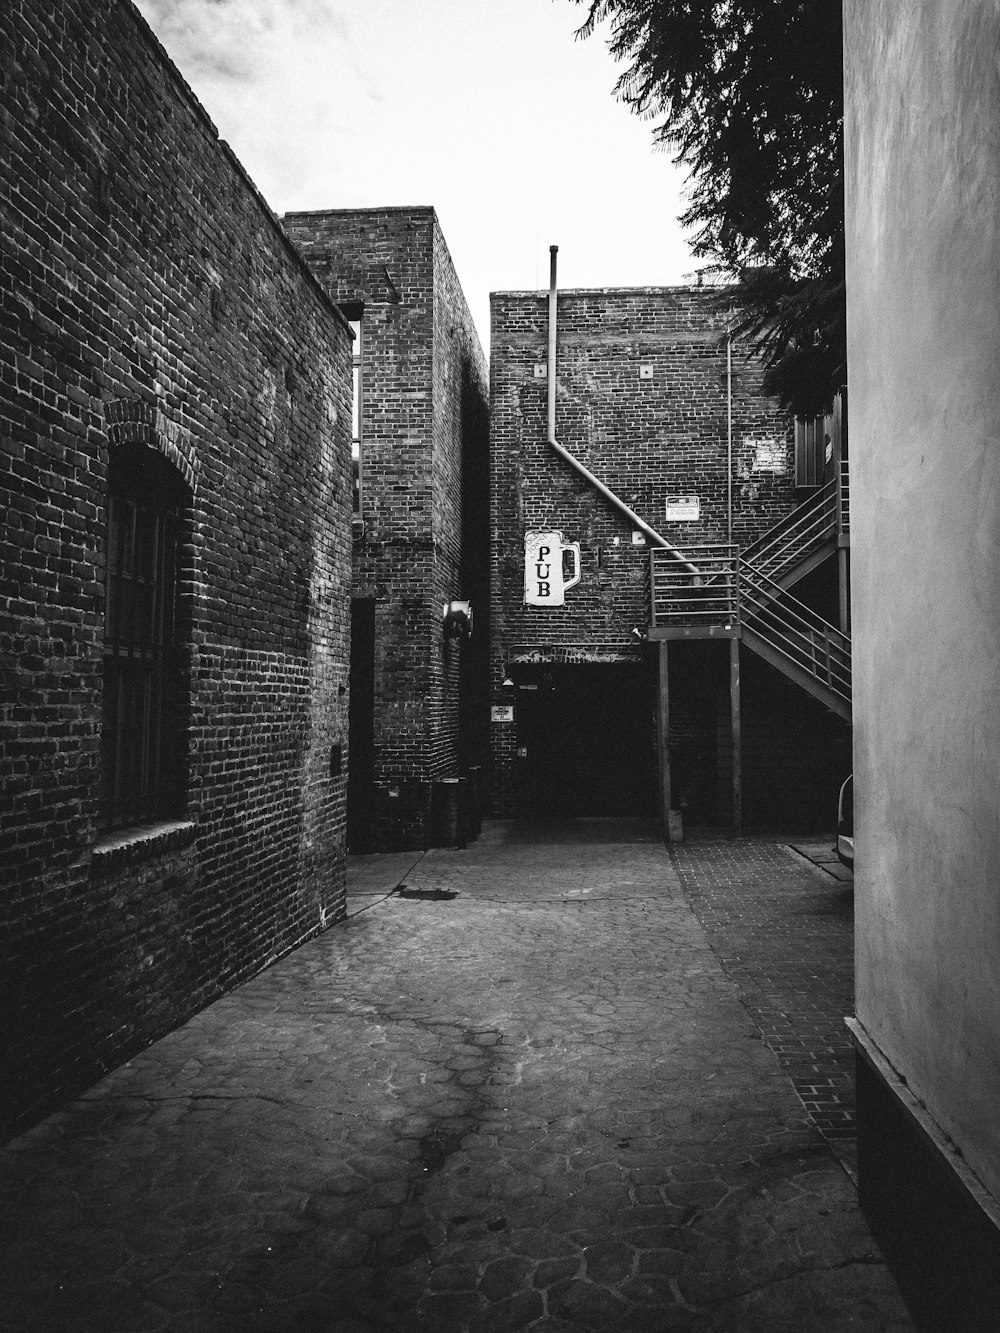 Fotografía en escala de grises de callejón con edificios de ladrillo